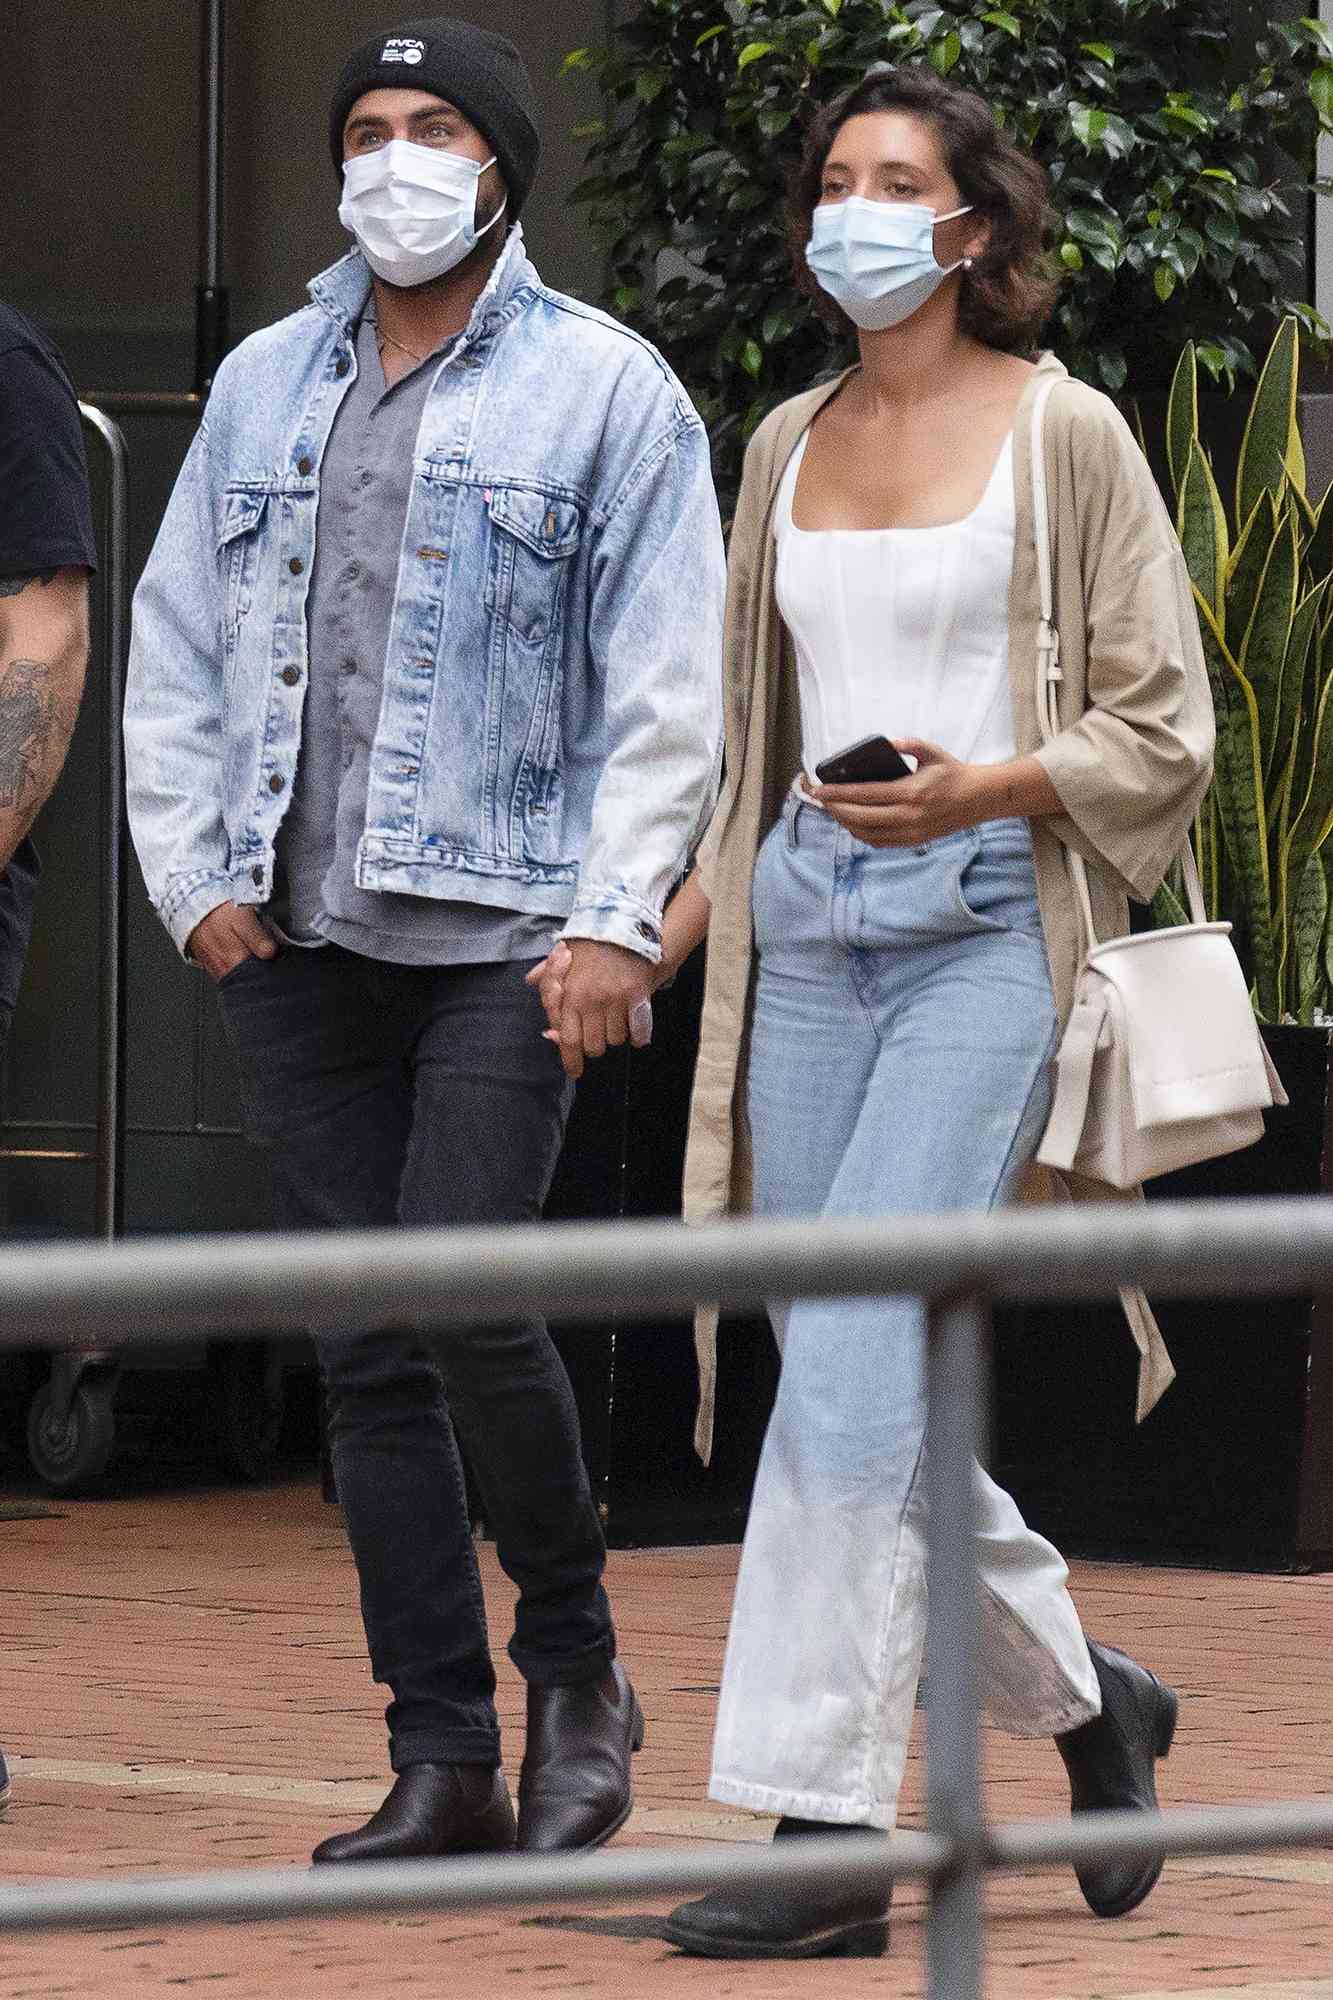 Zac Efron และแฟนสาว Vanessa Valladares จับมือกันระหว่างทานอาหารเย็นที่ออสเตรเลีย